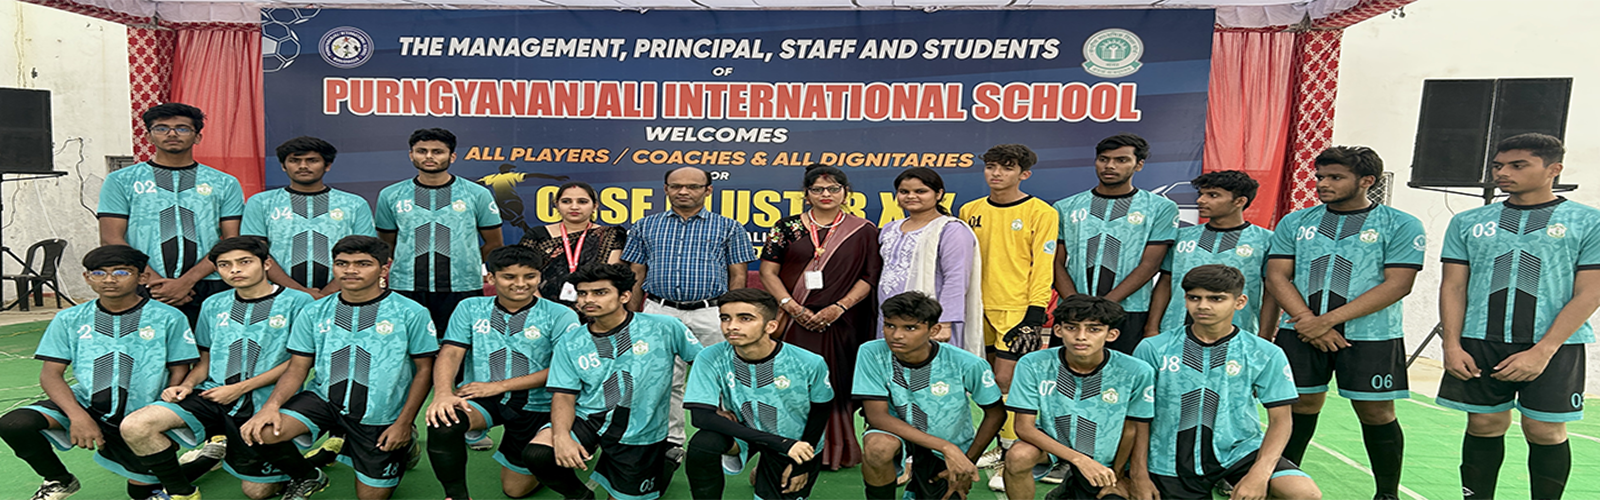 PurnGyanjali International School